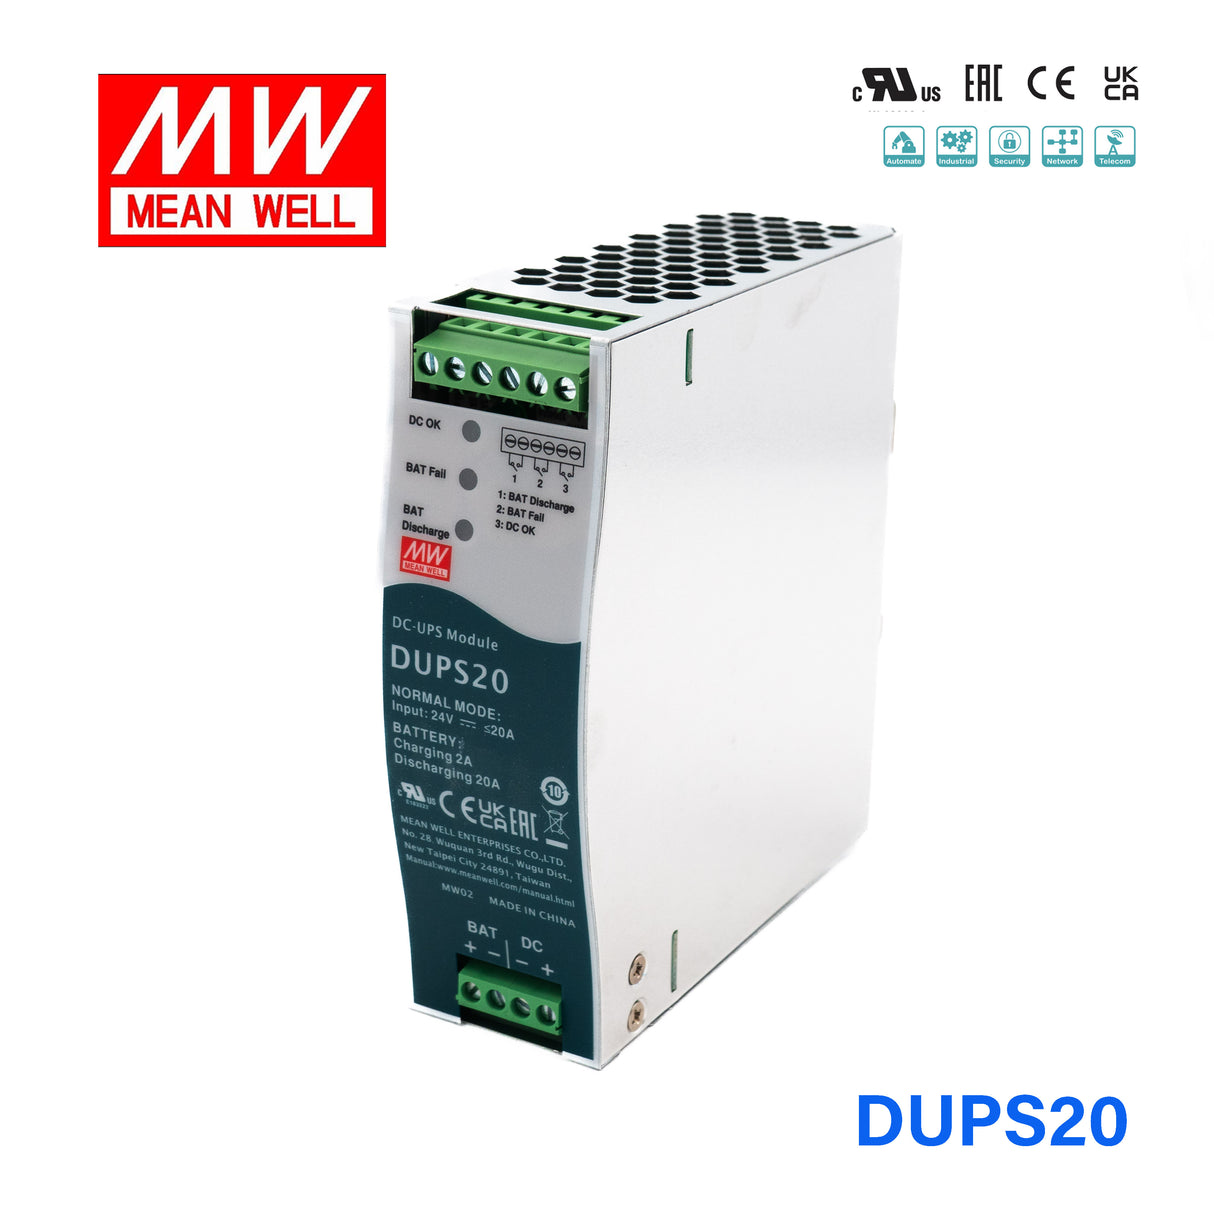 Mean Well DUPS20 DIN Series Uninterruptible DC-UPS Module 20A